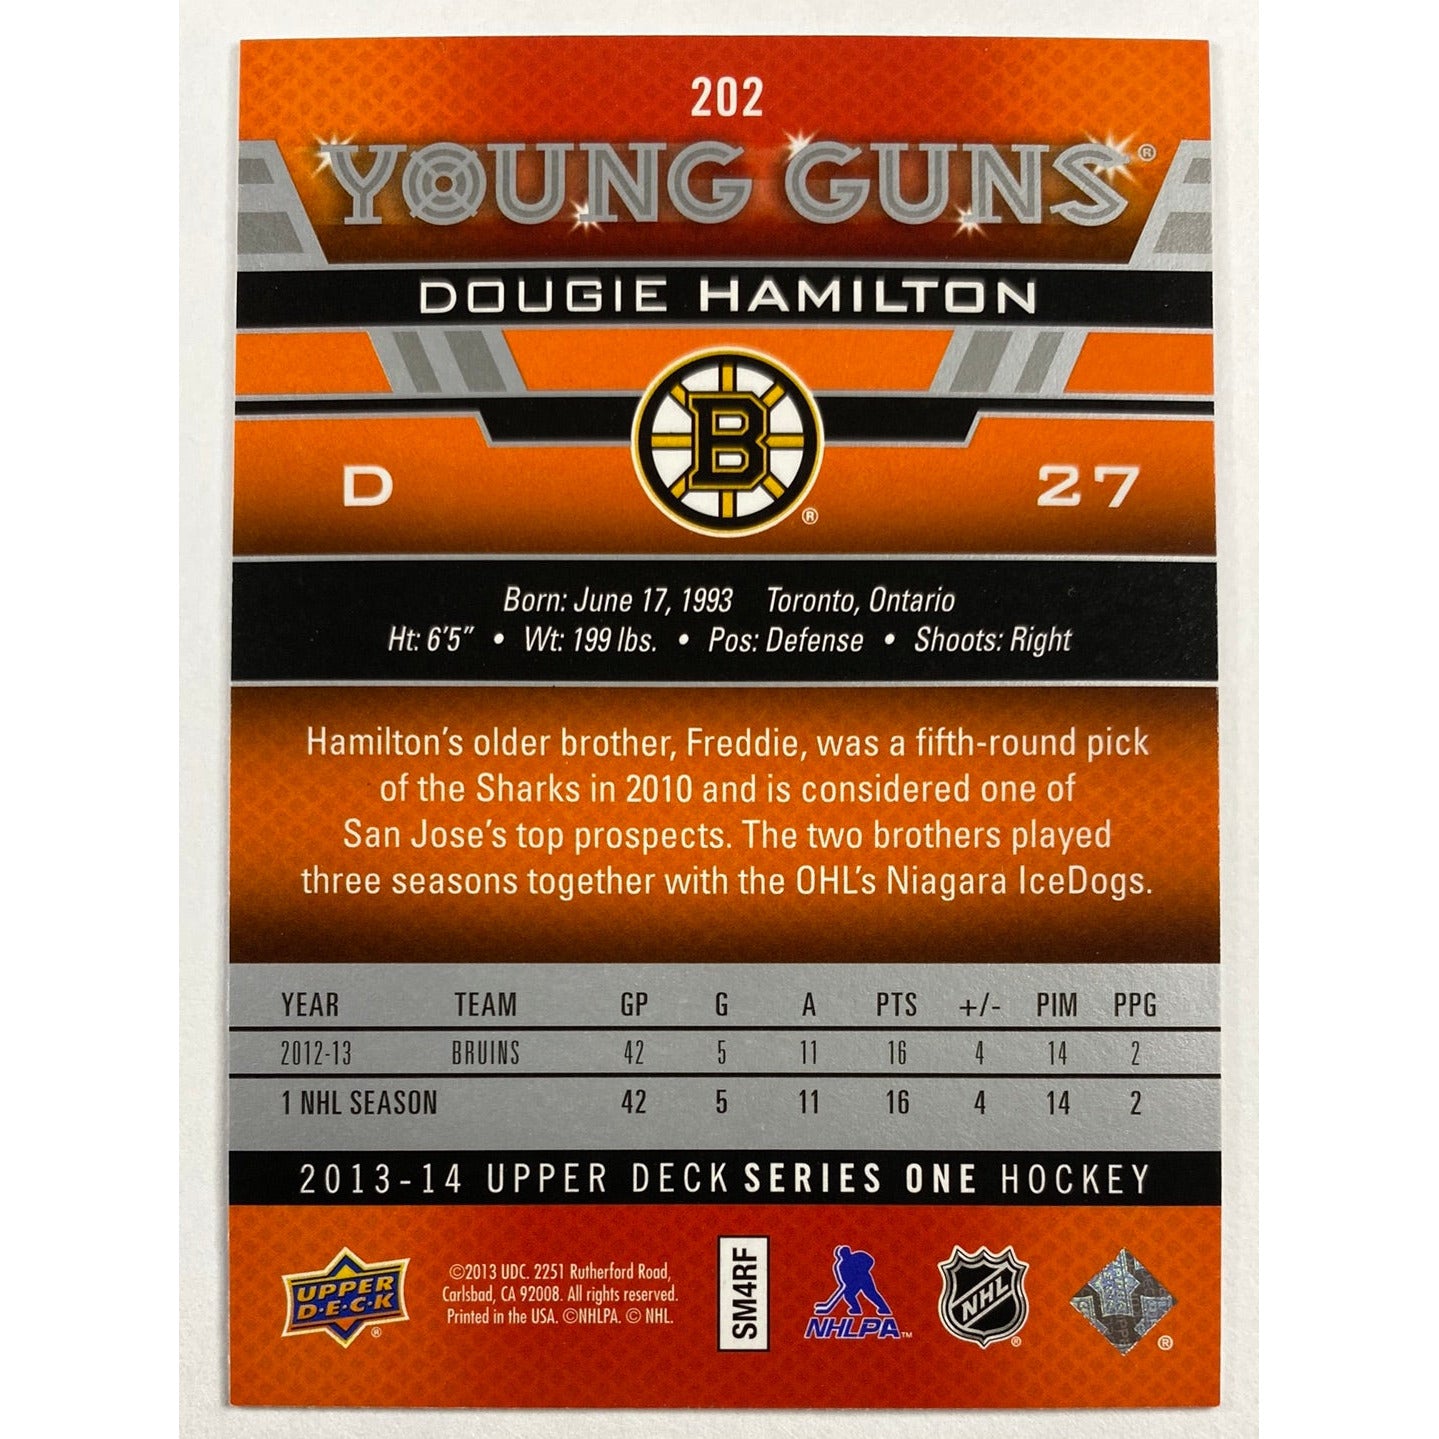 2013-14 Upper Deck Series 1 Dougie Hamilton Young Guns